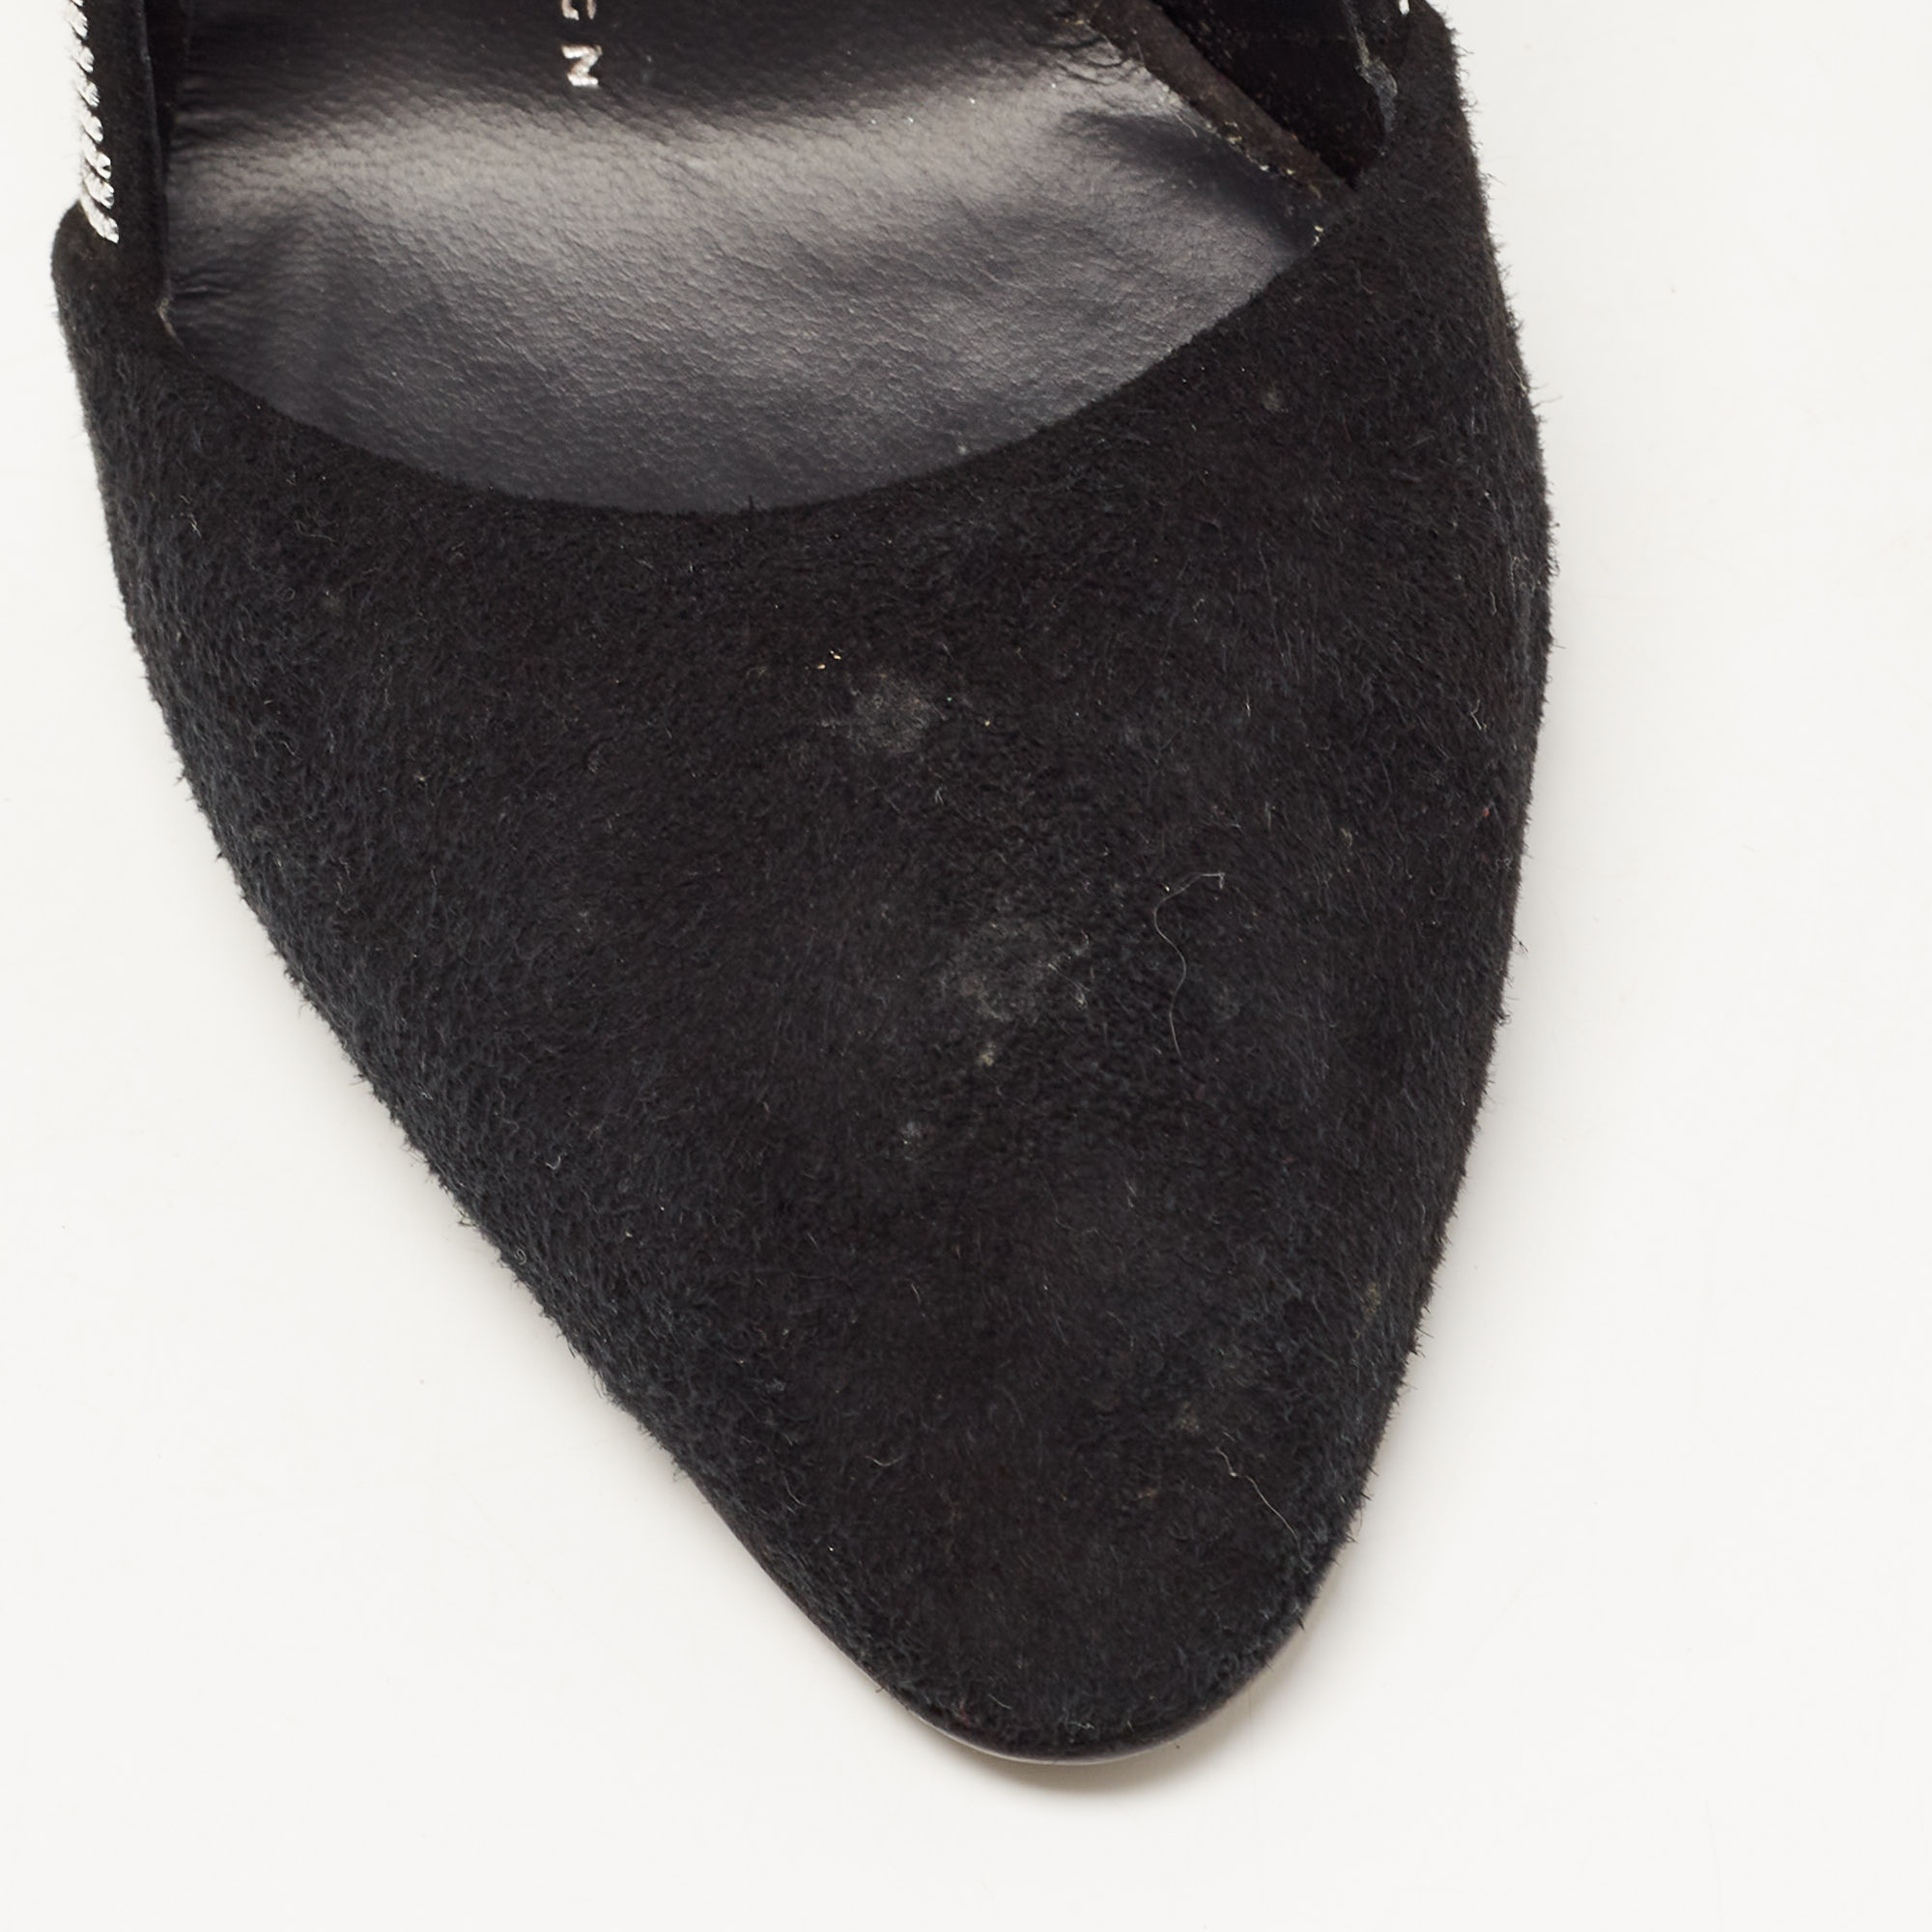 Giuseppe Zanotti Black Suede Crystal Embellished Pointed Toe Pumps Size 37